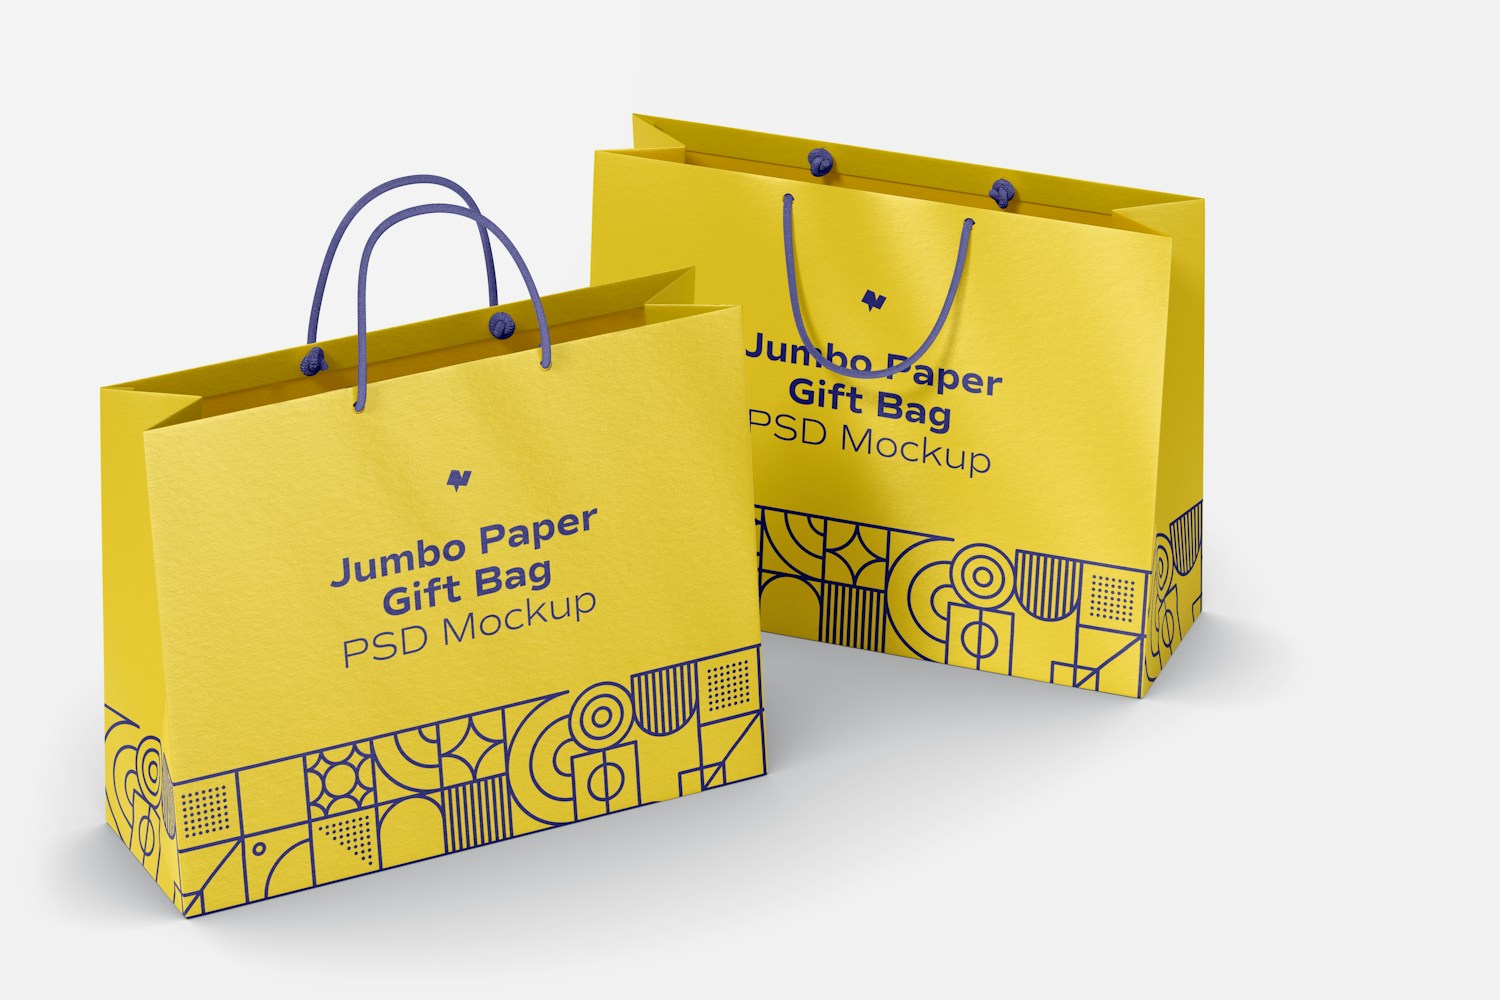 Jumbo Paper Gift Bags With Rope Handle Mockup